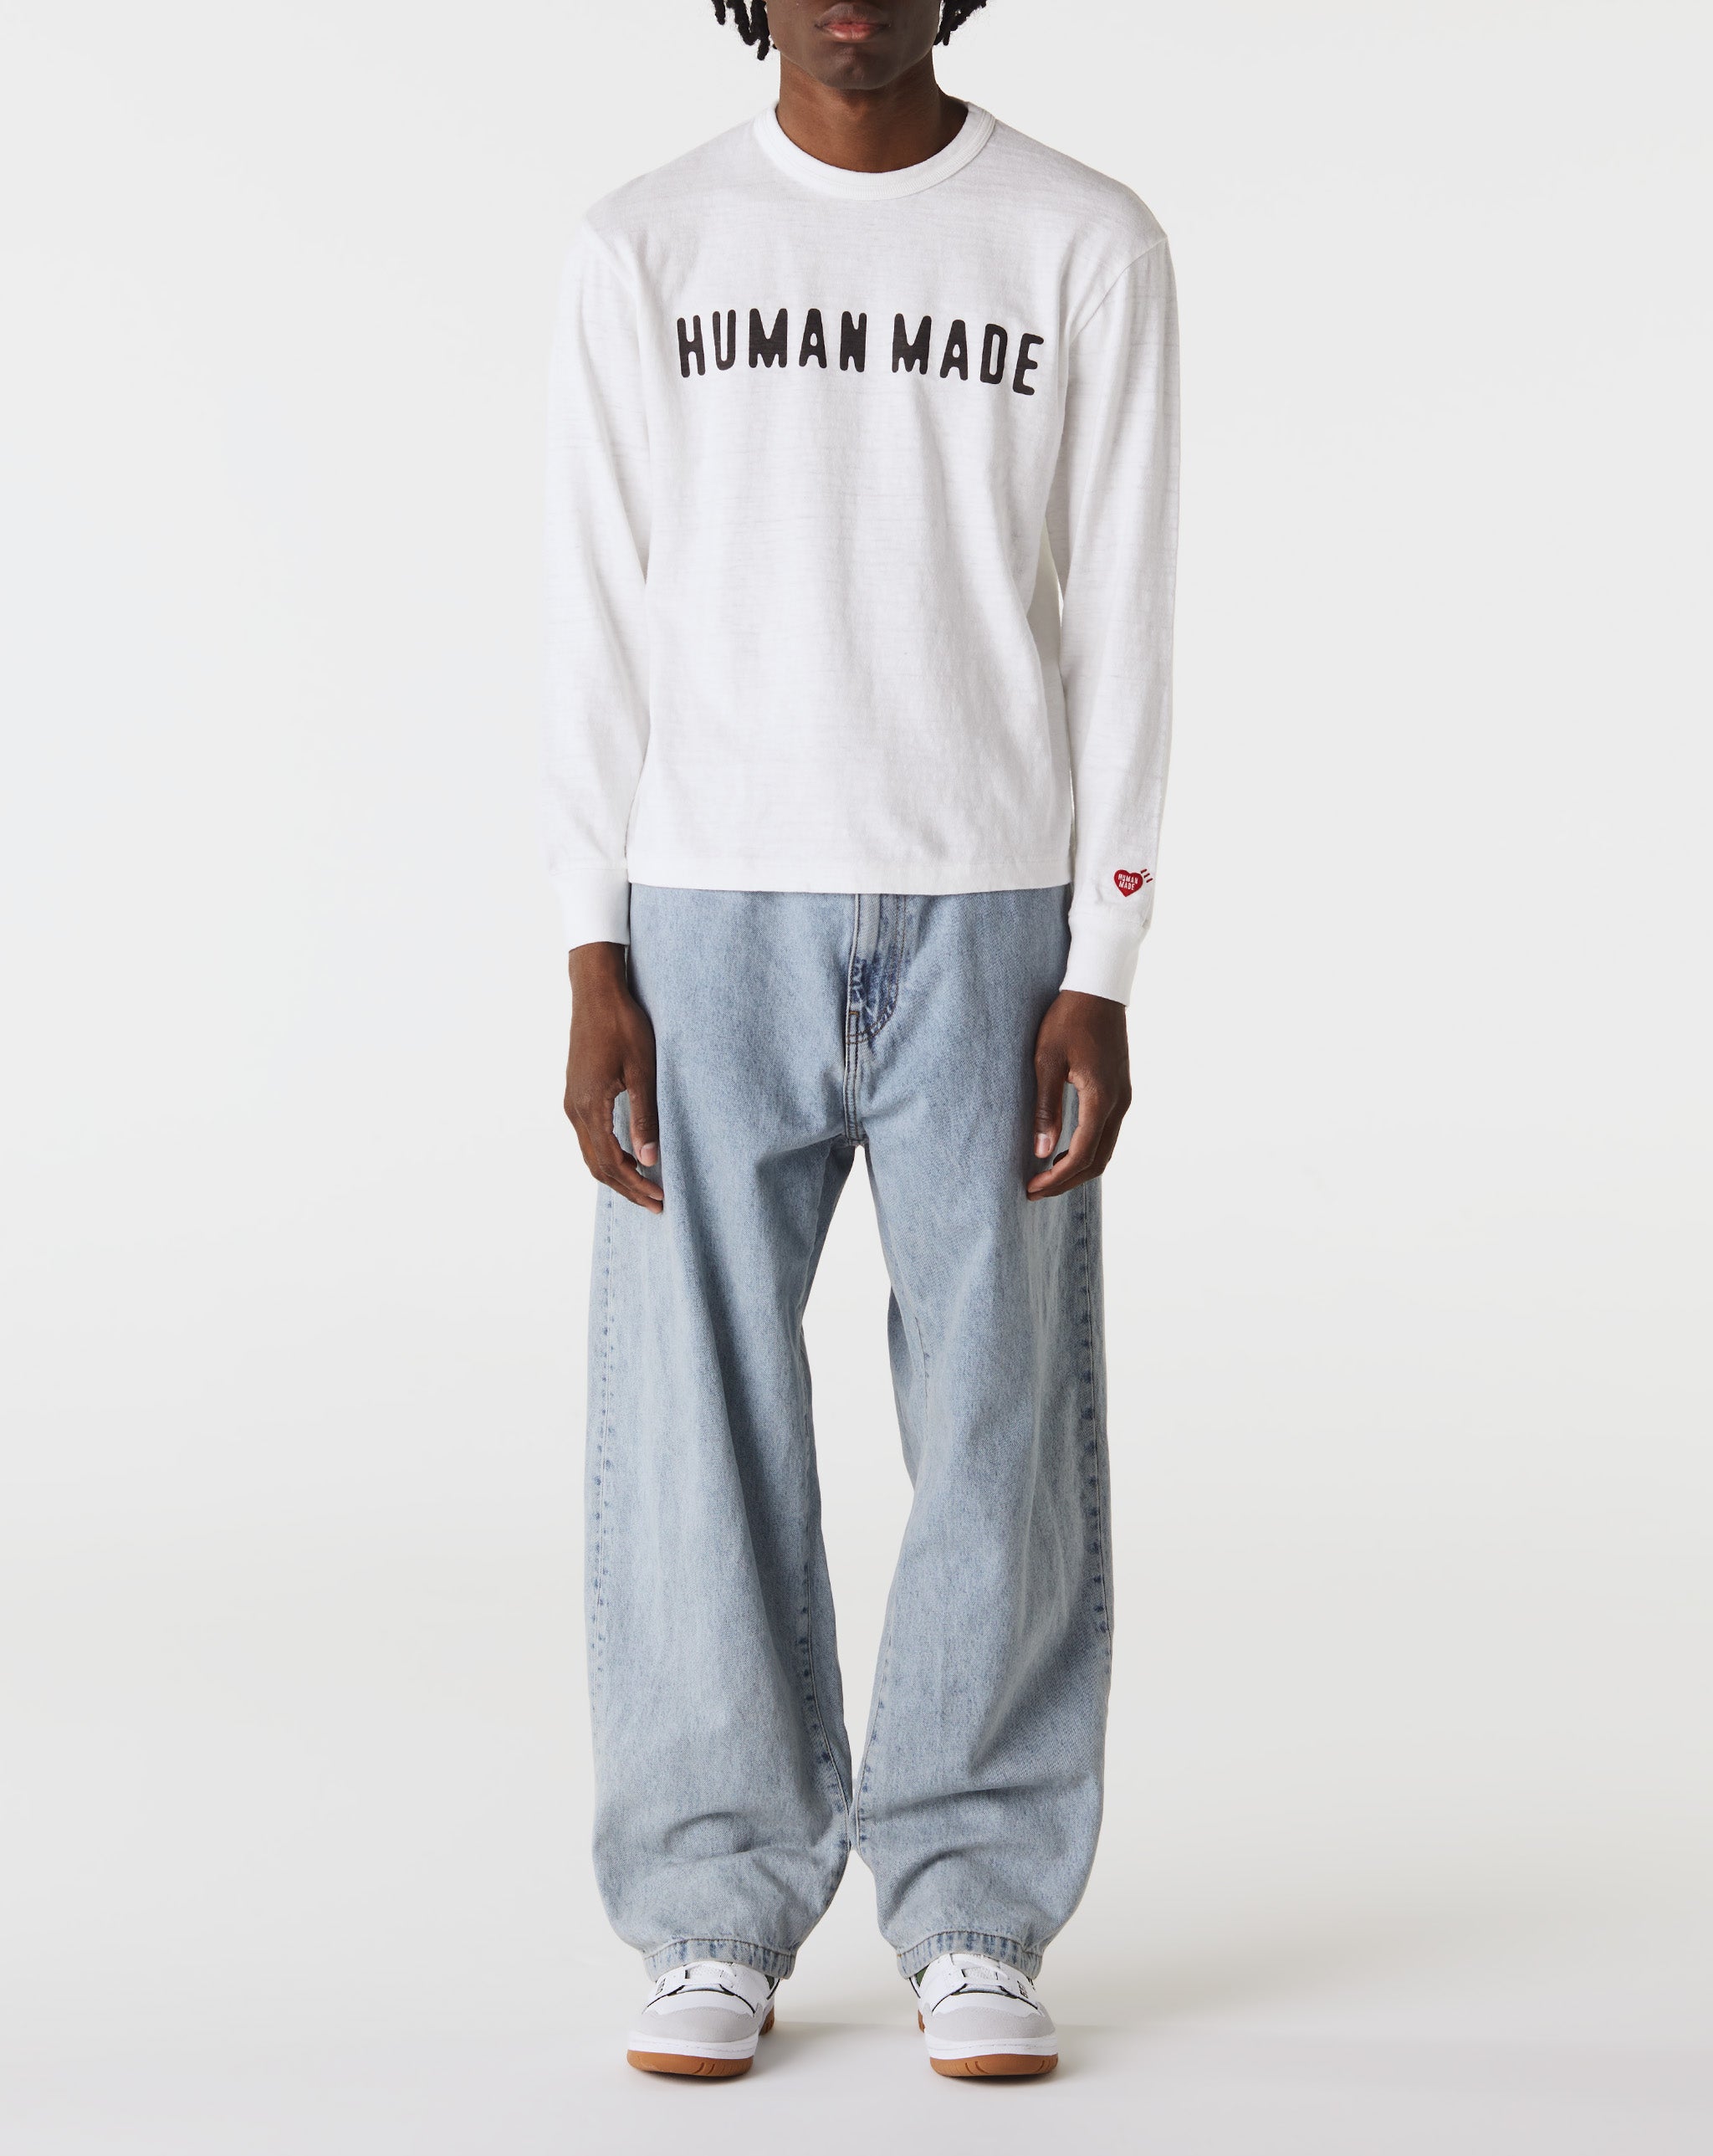 Human Made Graphic L/S T-Shirt  - Cheap Cerbe Jordan outlet